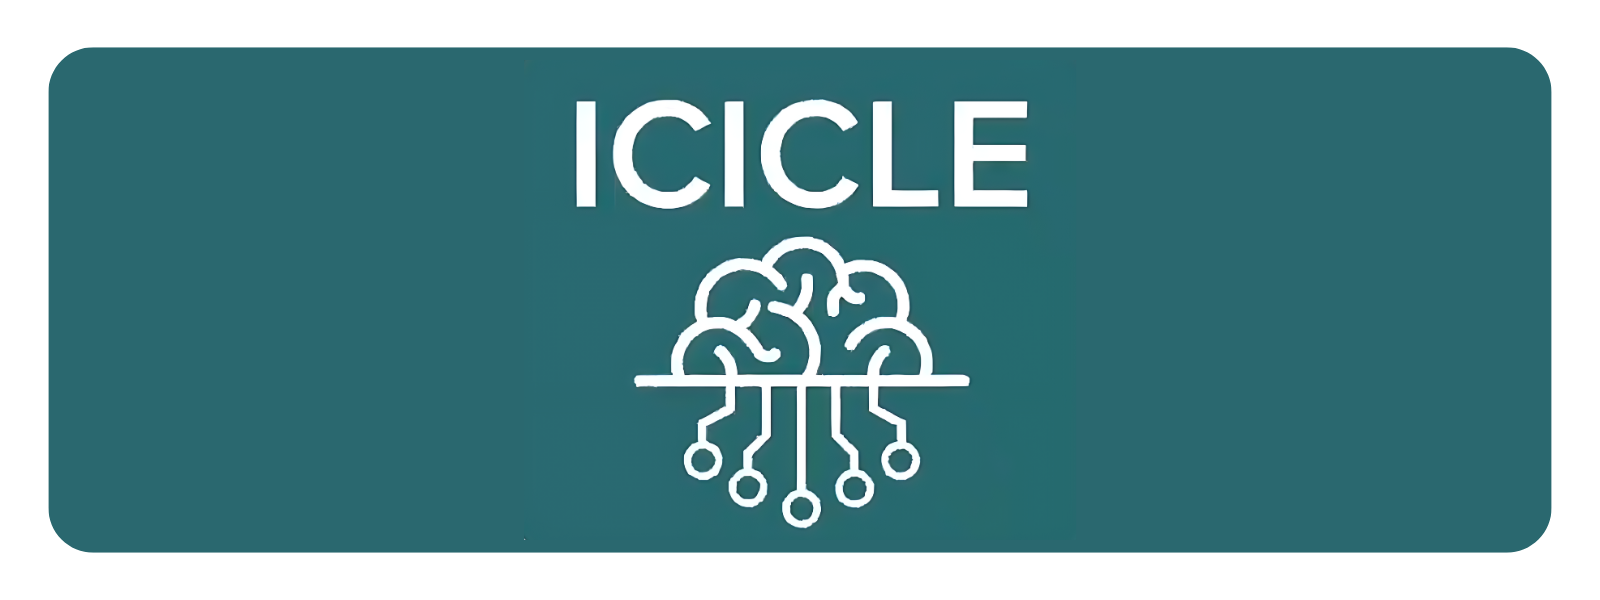 ICICLE Educational Fellows Logo